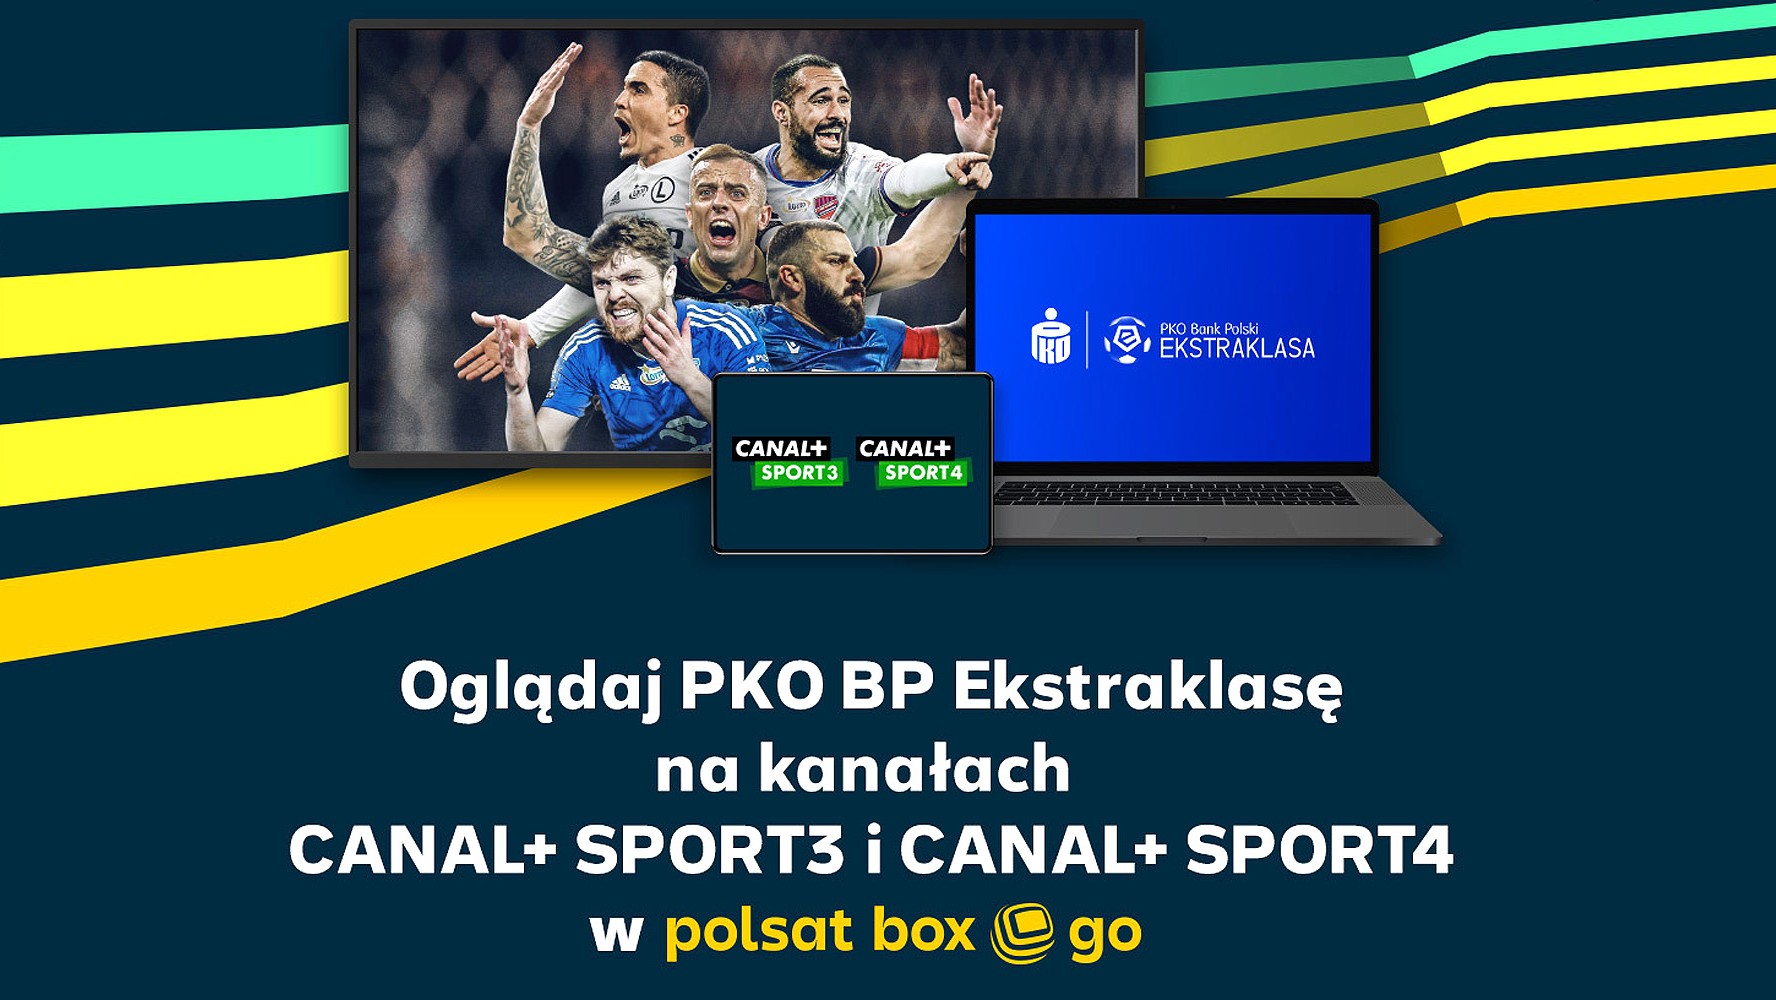 PKO BP Ekstraklasa na żywo w Polsat Box Go